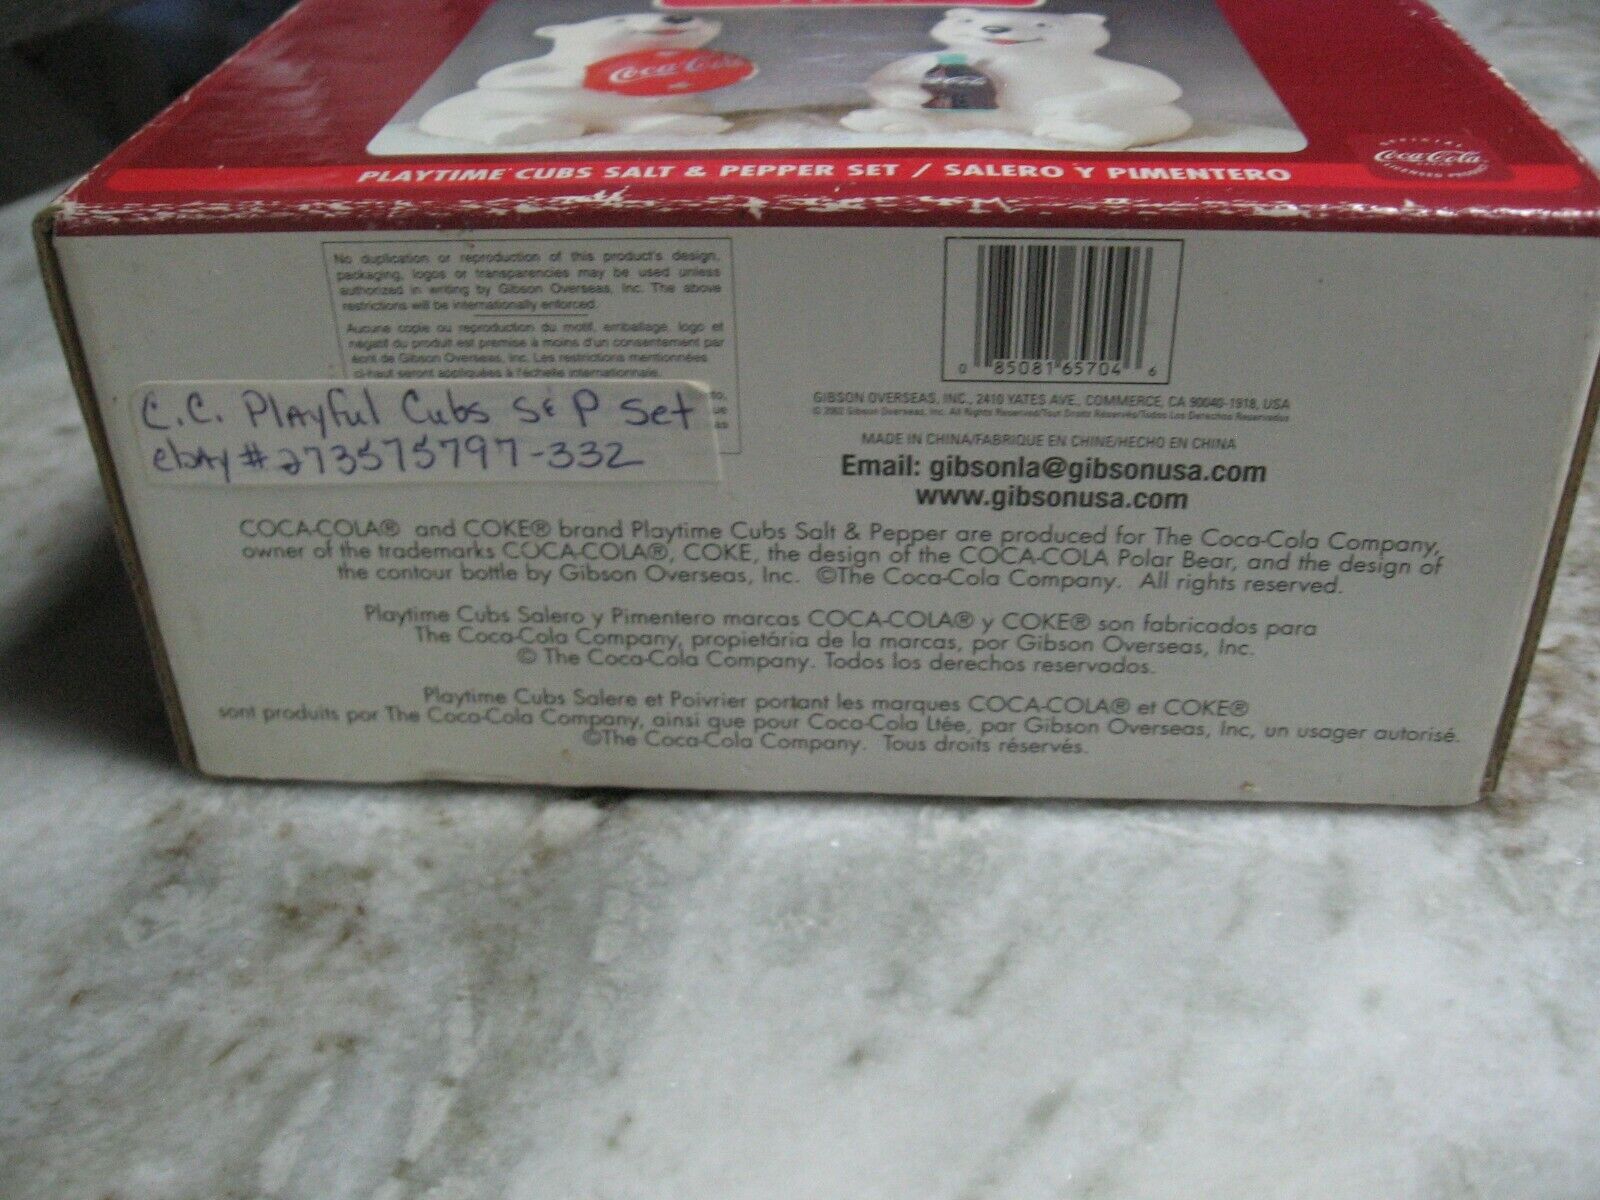 COCA COLA PLAYFUL CUBS POLAR BEAR SALT AND PEPPER SHAKER SET - #41165 2002 NIB COKE BRAND - фотография #11